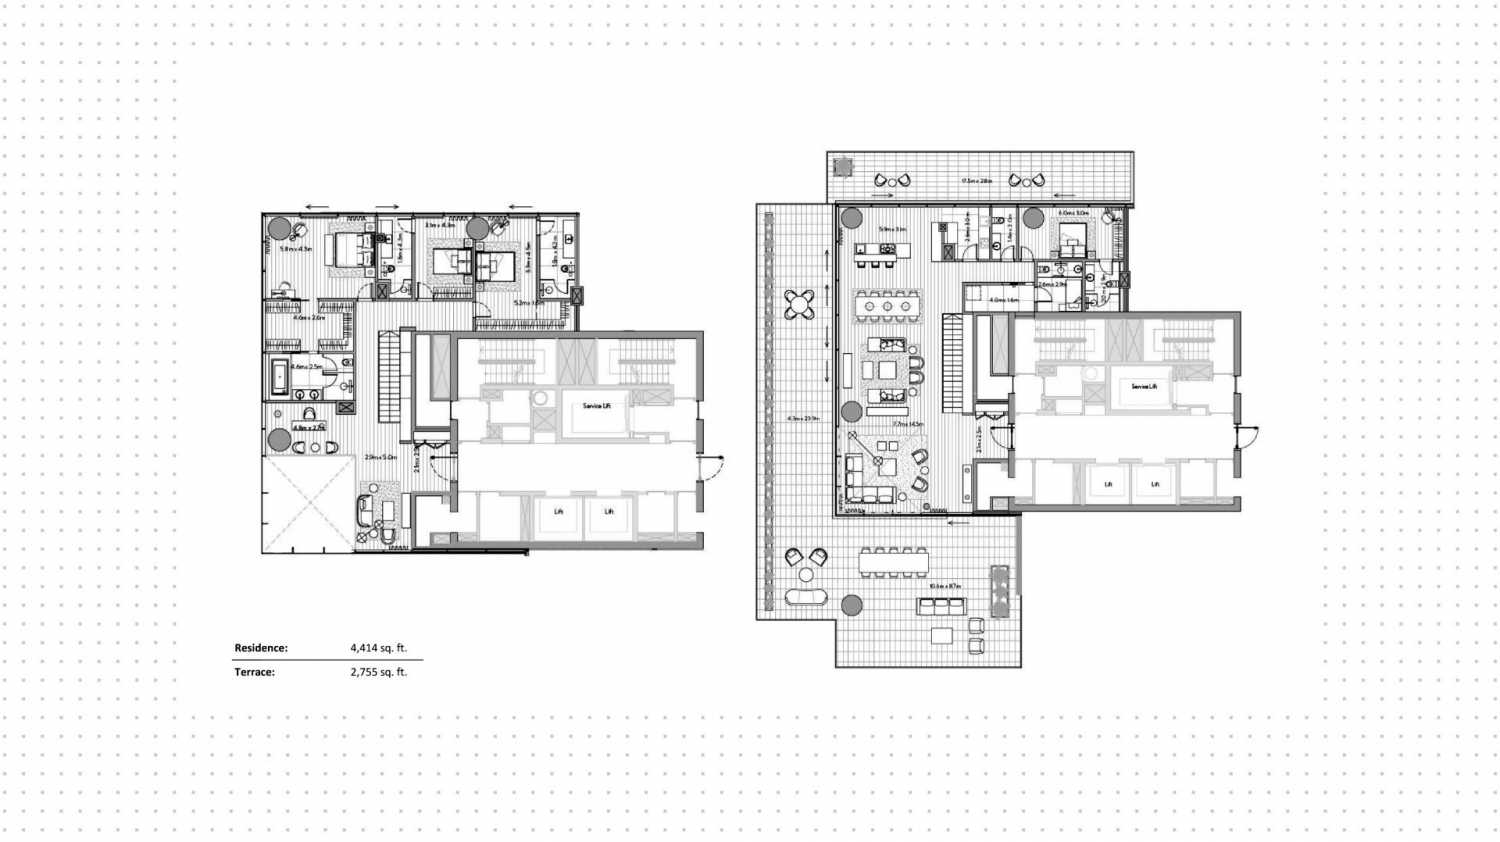 4-bedrooms apartment-0-1